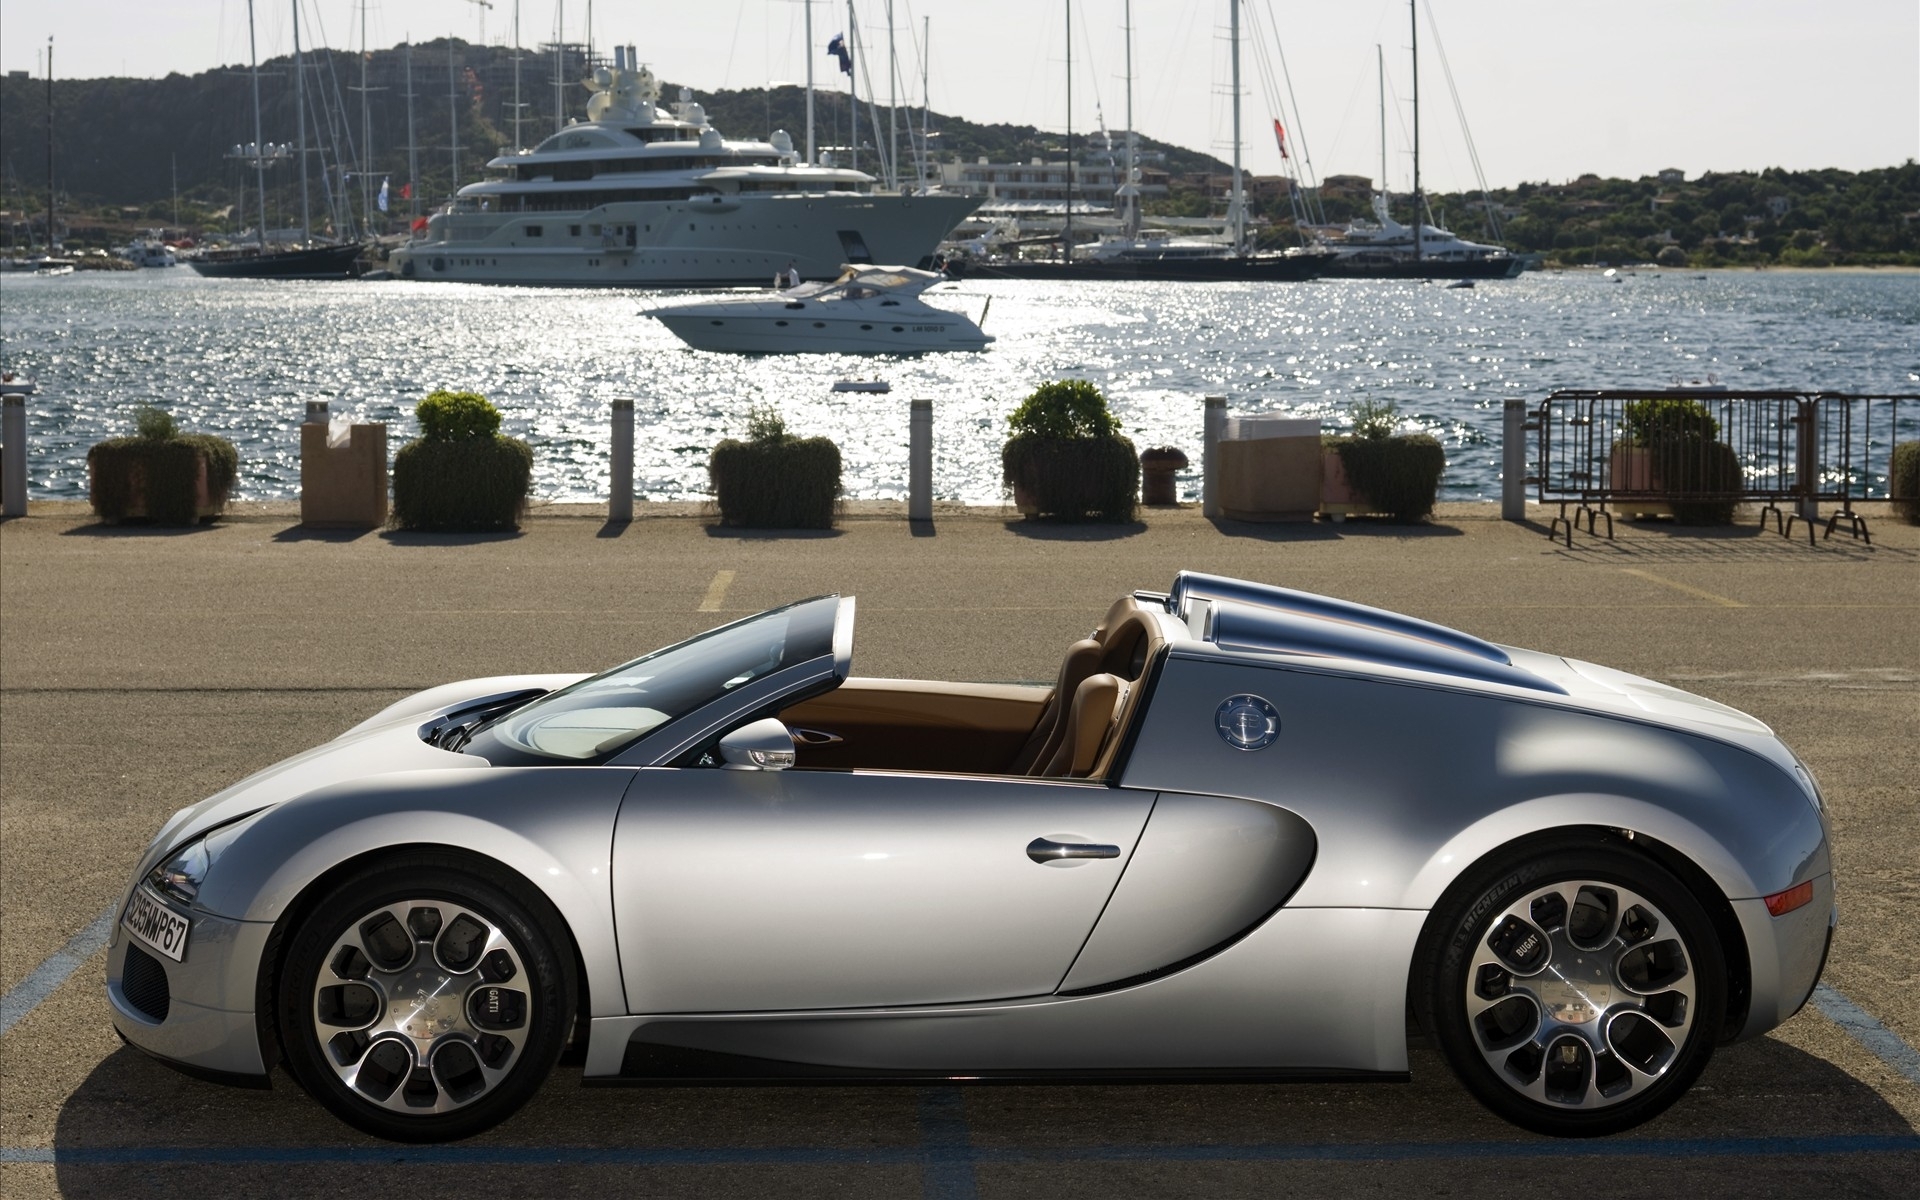 Descarga gratuita de fondo de pantalla para móvil de Yates, Transporte, Automóvil, Bugatti.